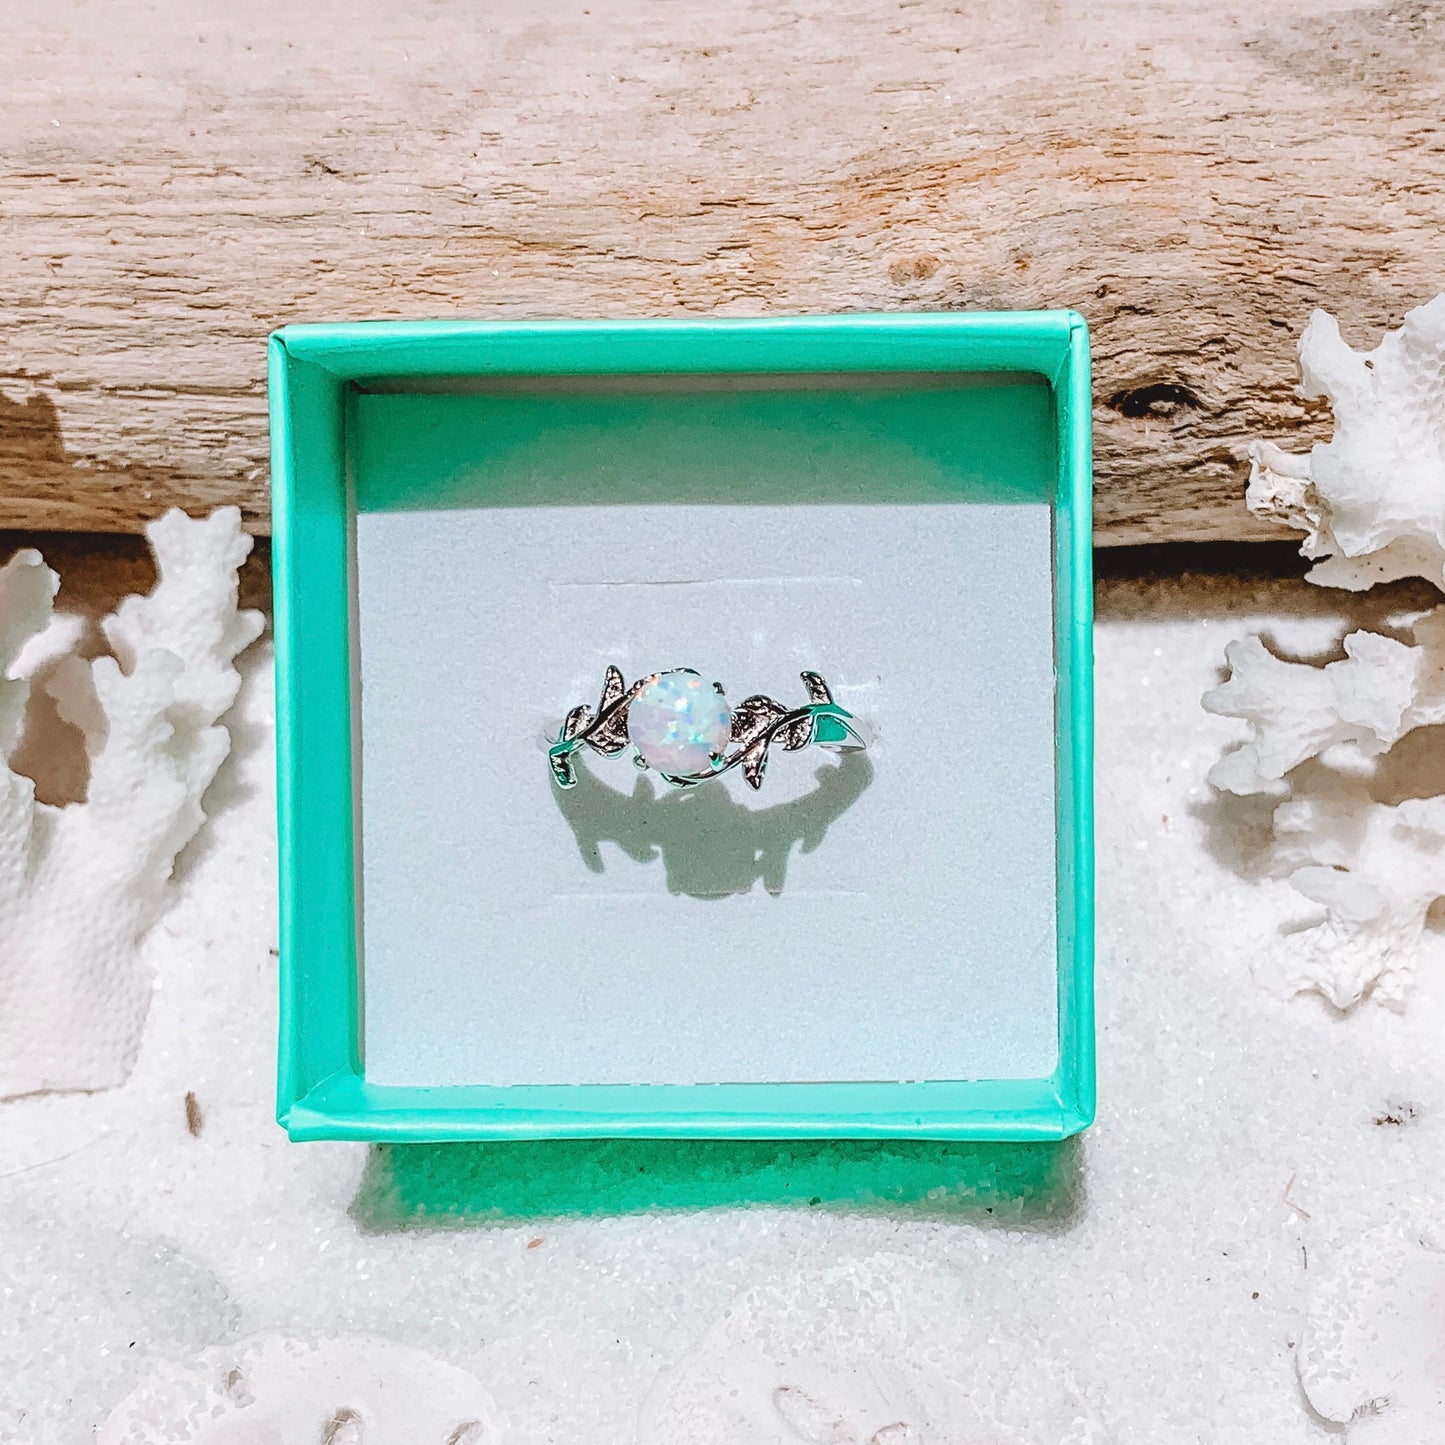 White Fire Opal Ring | Opal Leaf Ring | Opal Twig Ring | Opal Promise Ring | Opal Vine Ring | Nature Ring | Dainty Opal Ring | Branch Ring